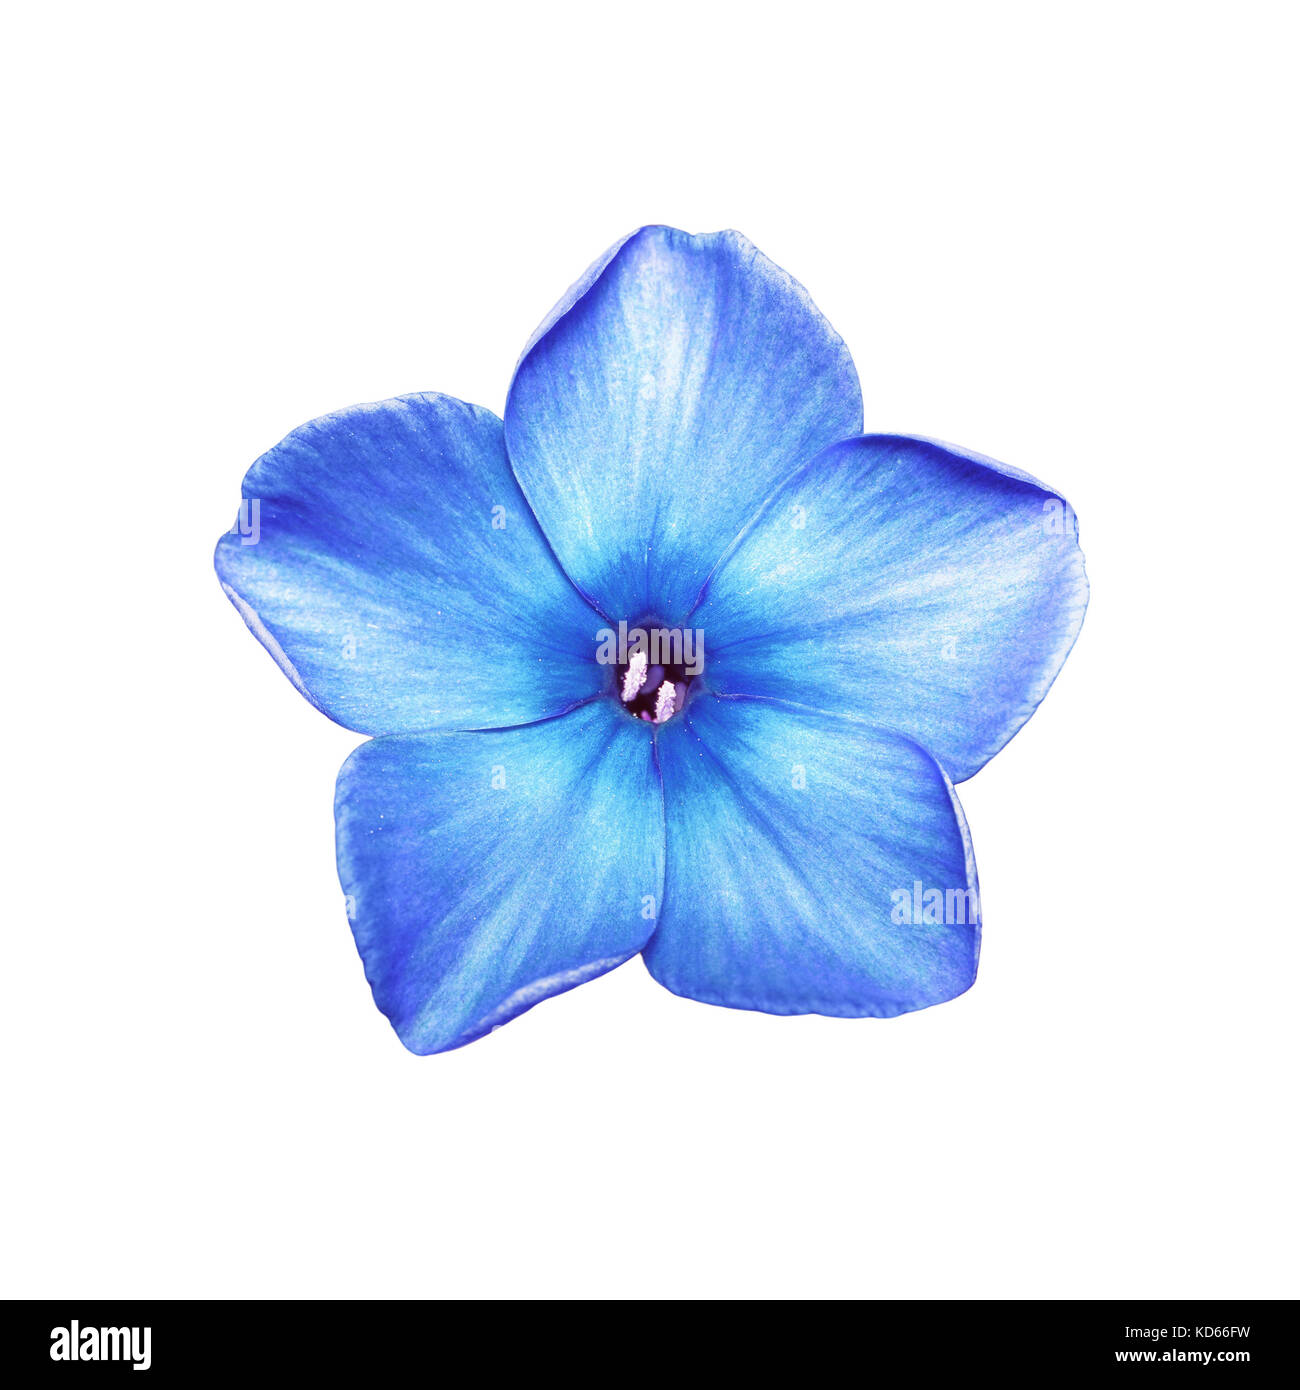 Blue Phlox Flower Isolated on White Stock Photo